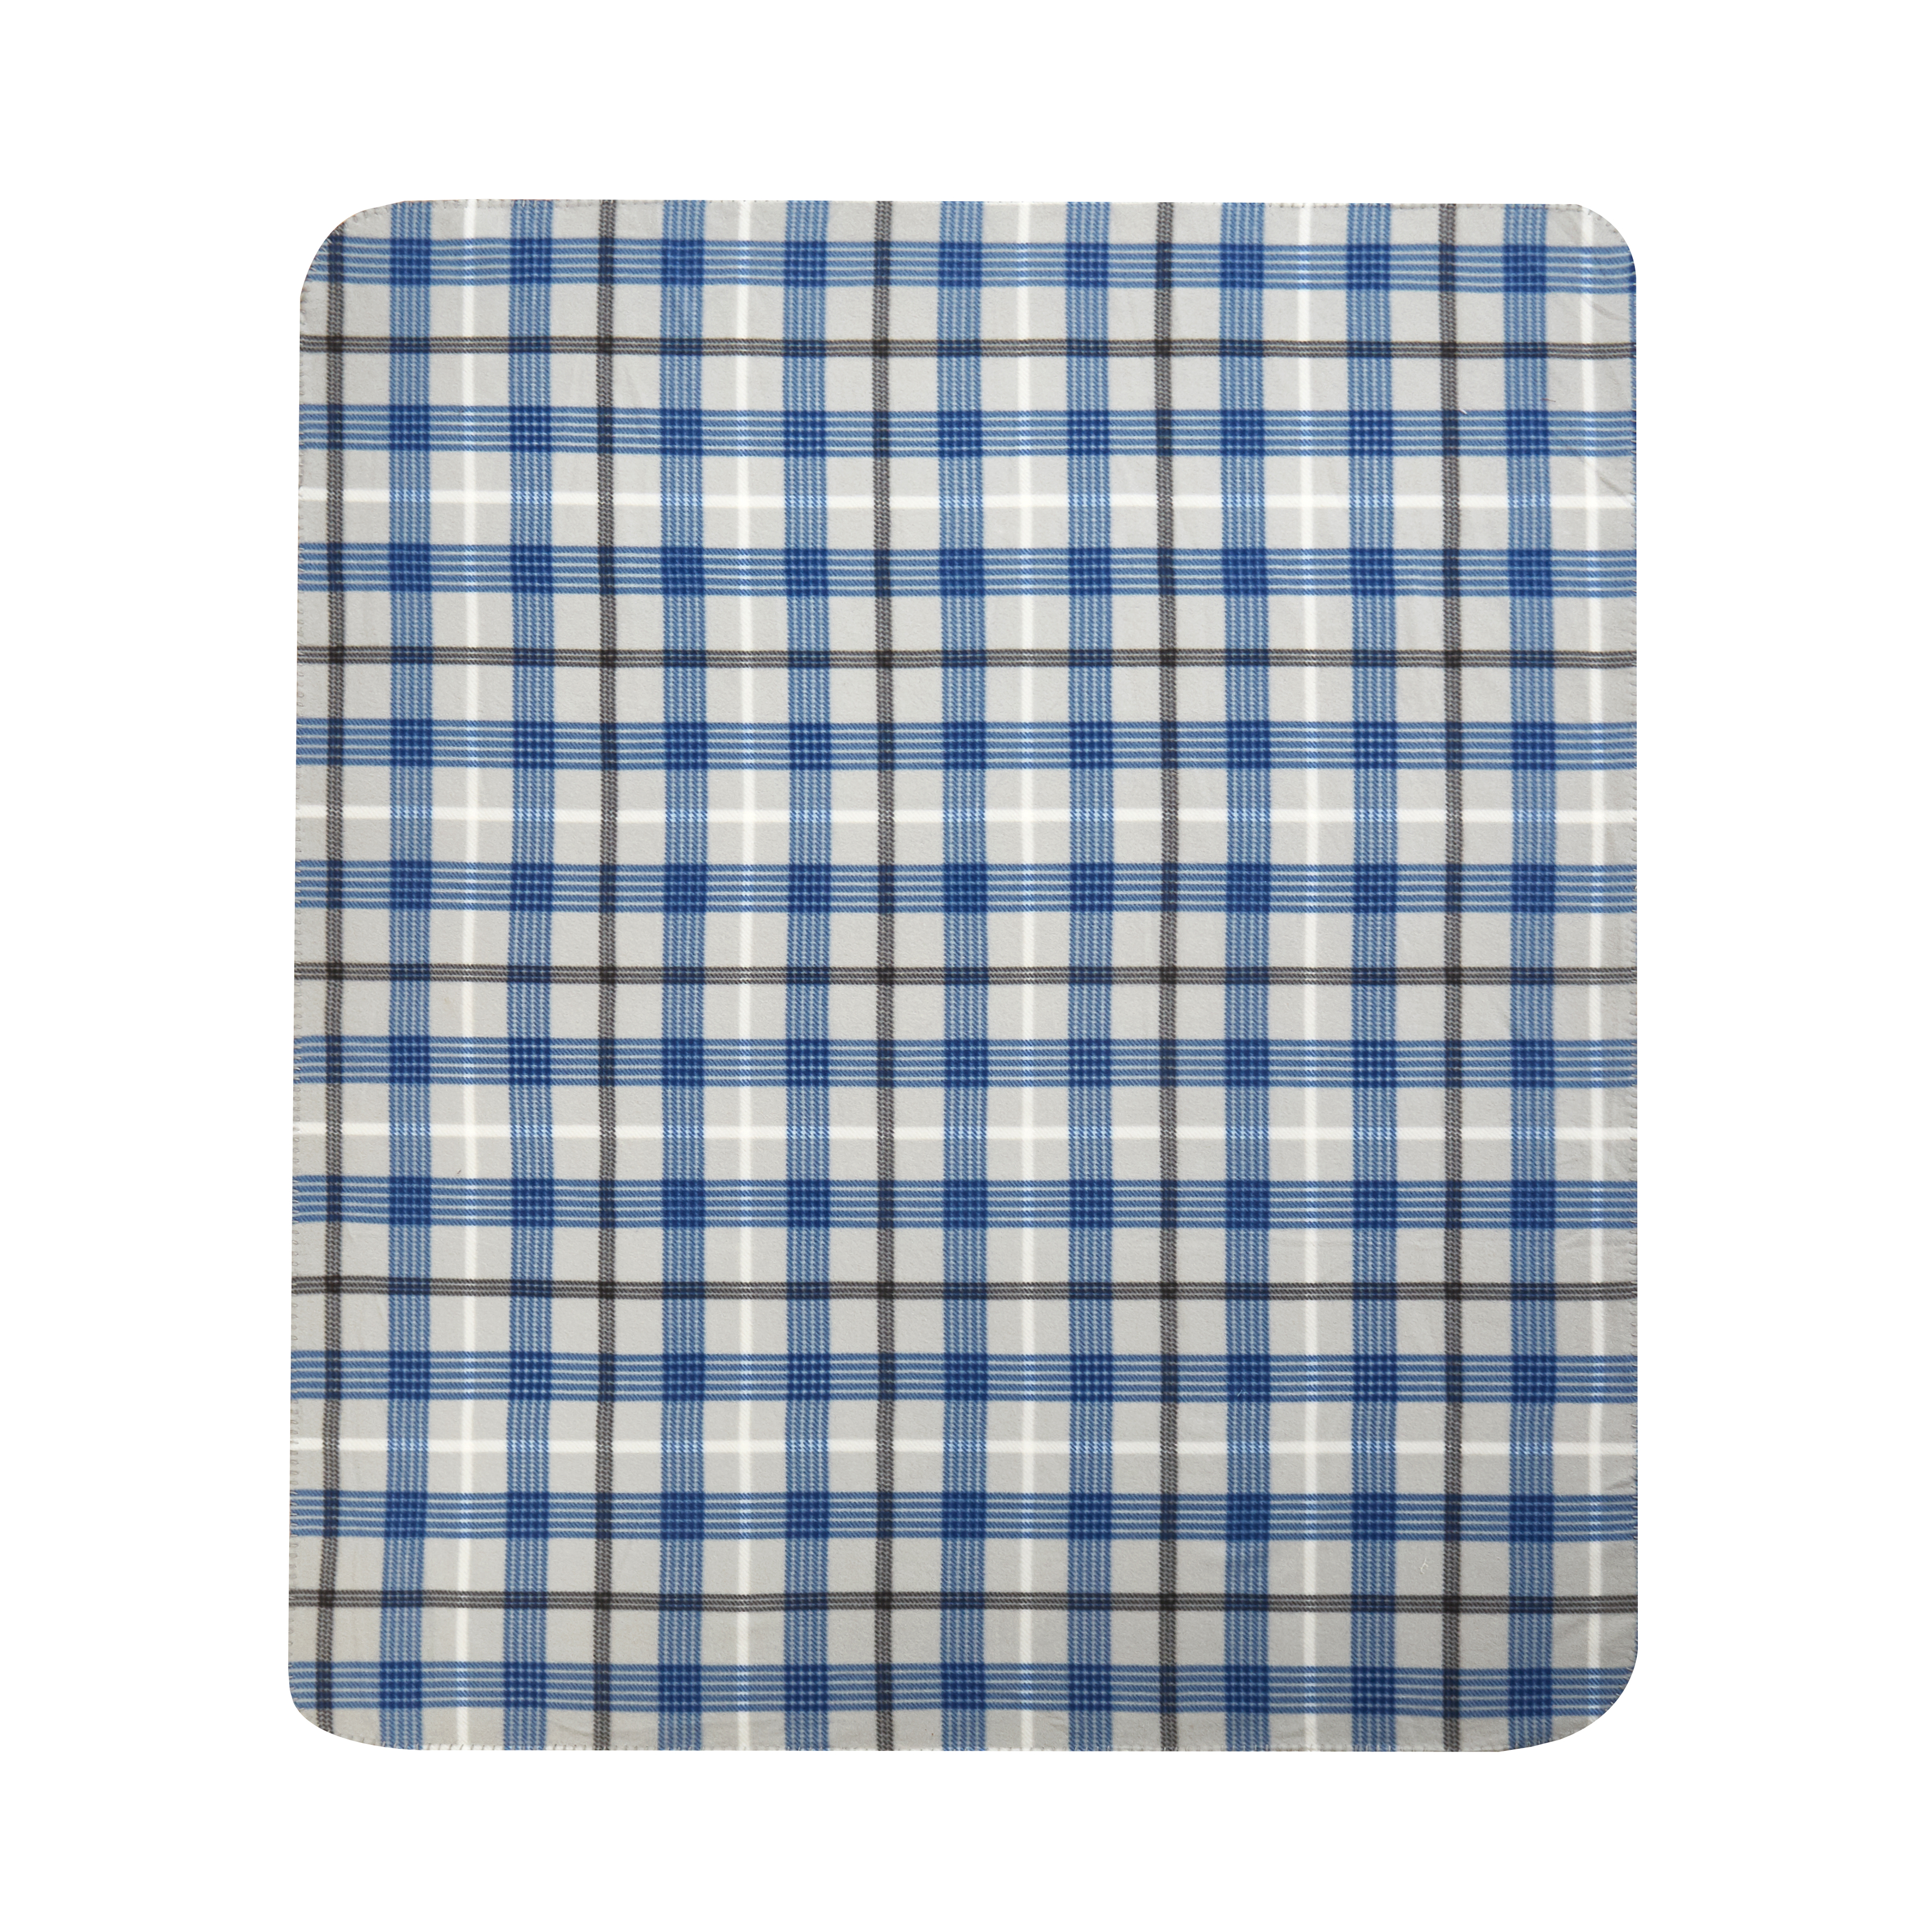 Mainstays Blue, Gray Plaid Fleece Throw, 60" x 50" - image 4 of 6